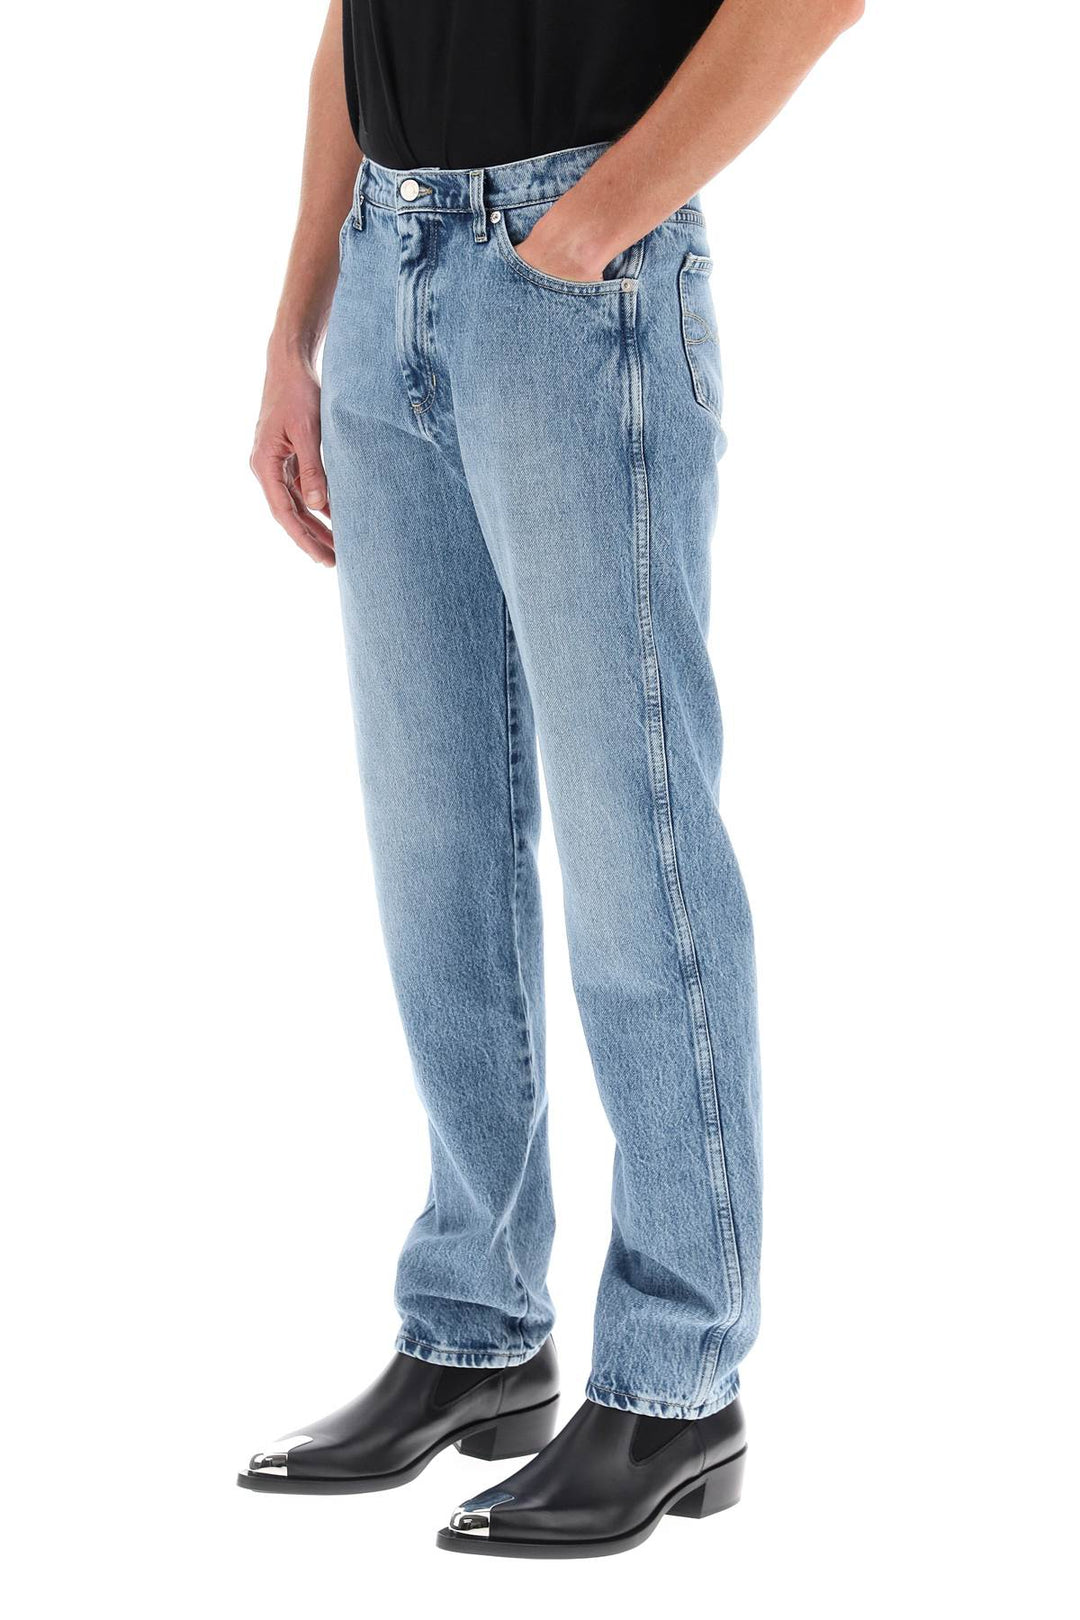 Bally Straight Cut Jeans   Celeste